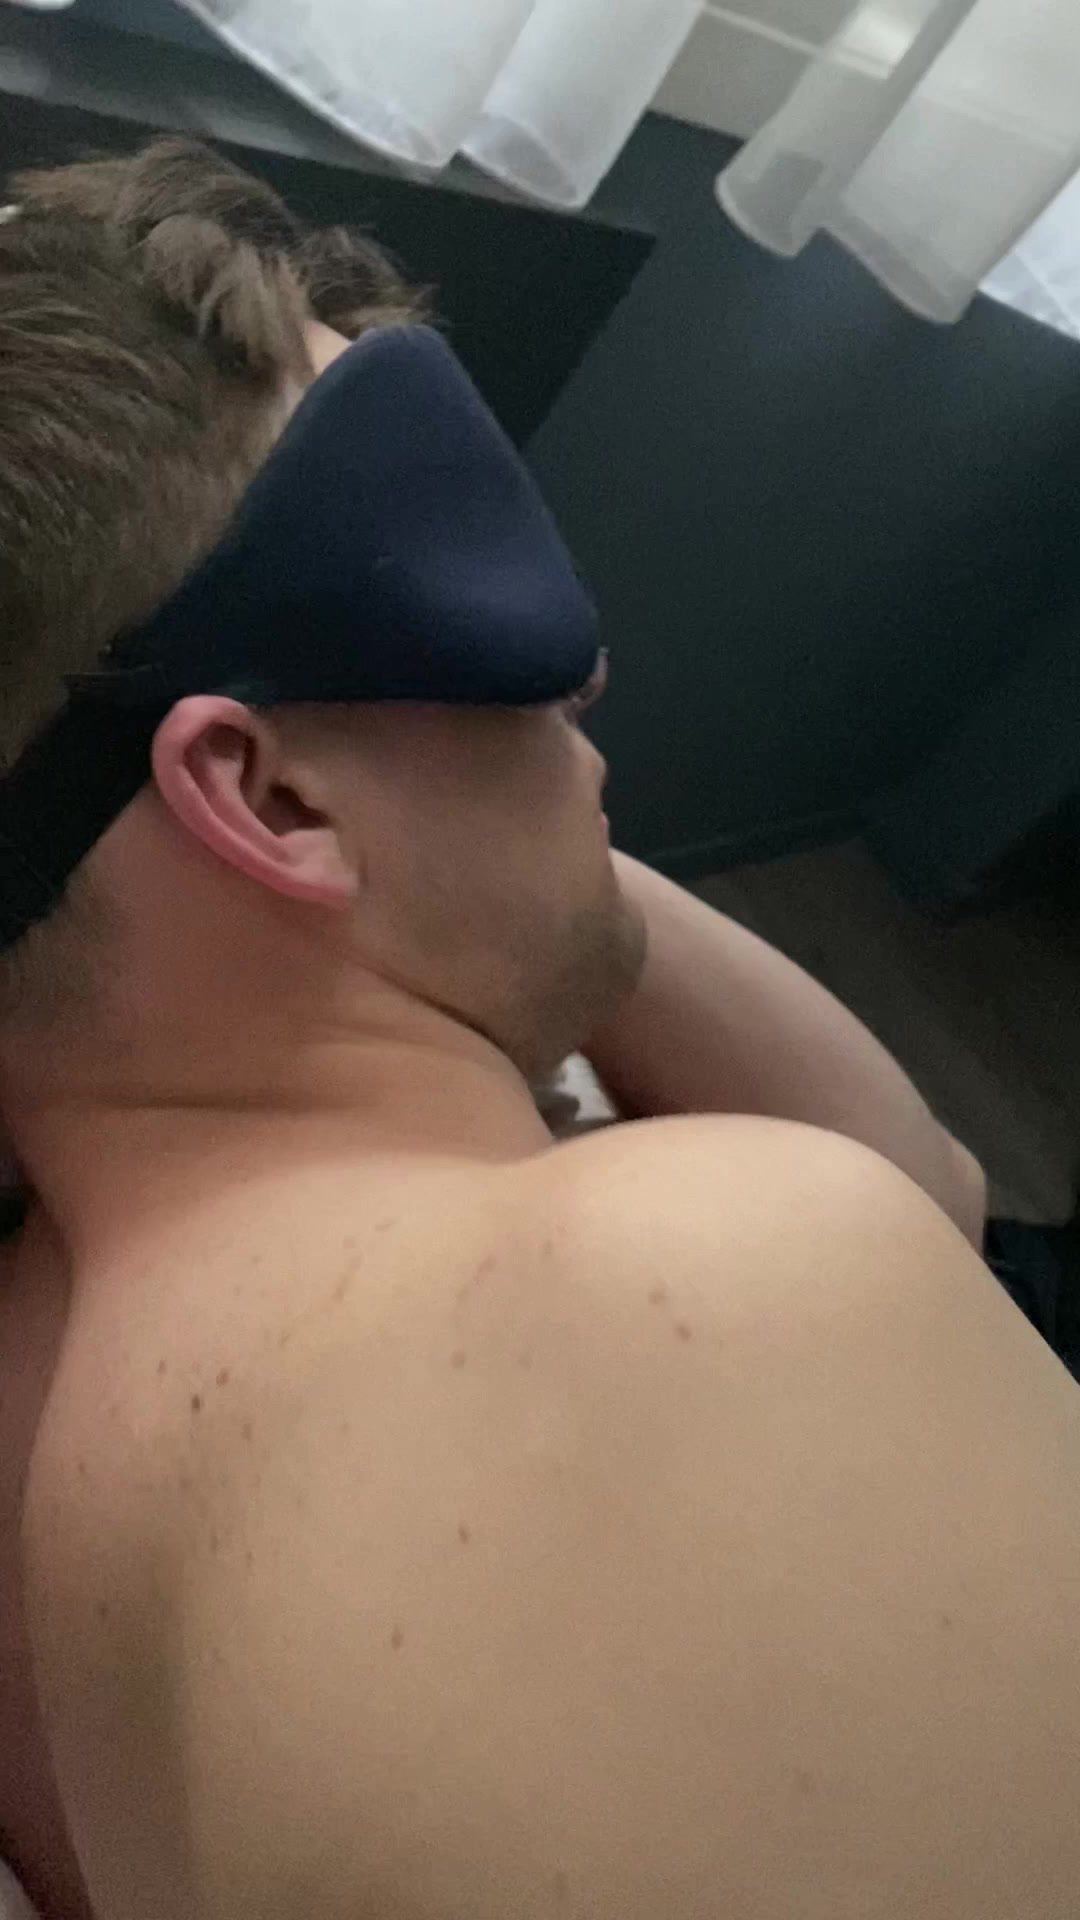 Hairy nipple bud snoring in hotel